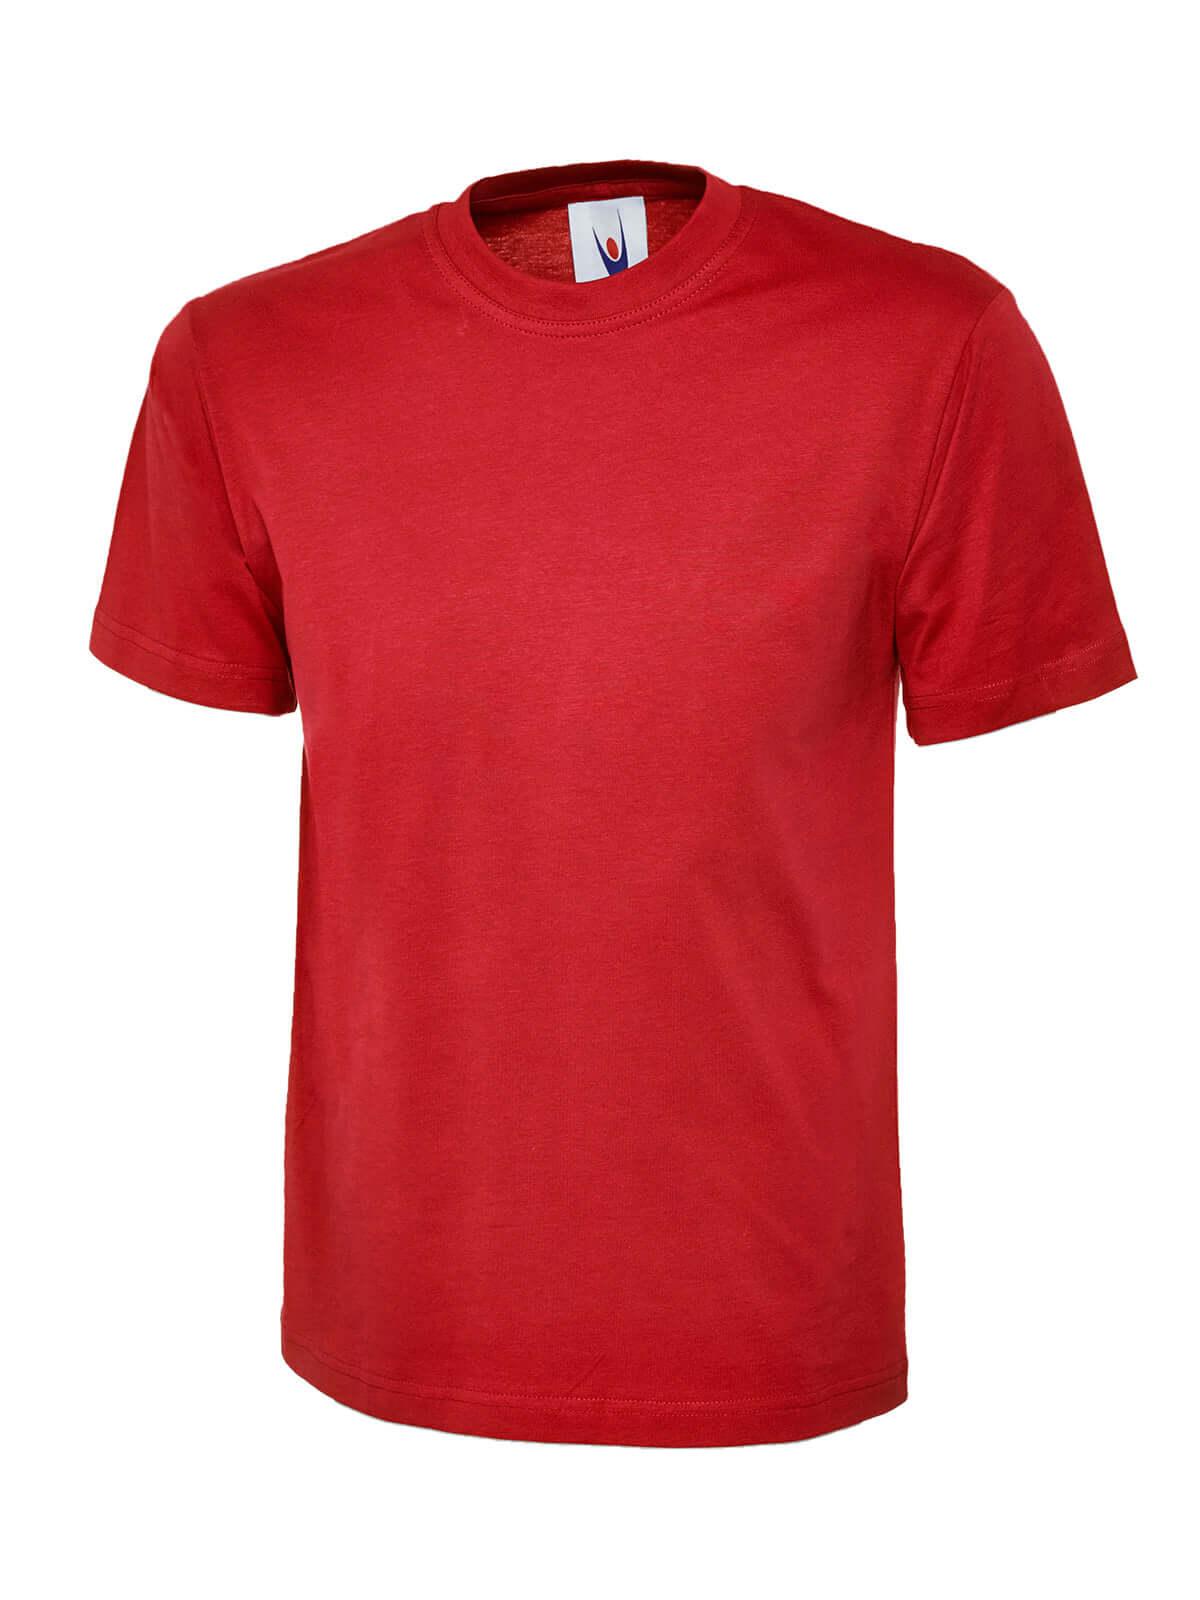 Pegasus Uniform Classic T-shirt - Red